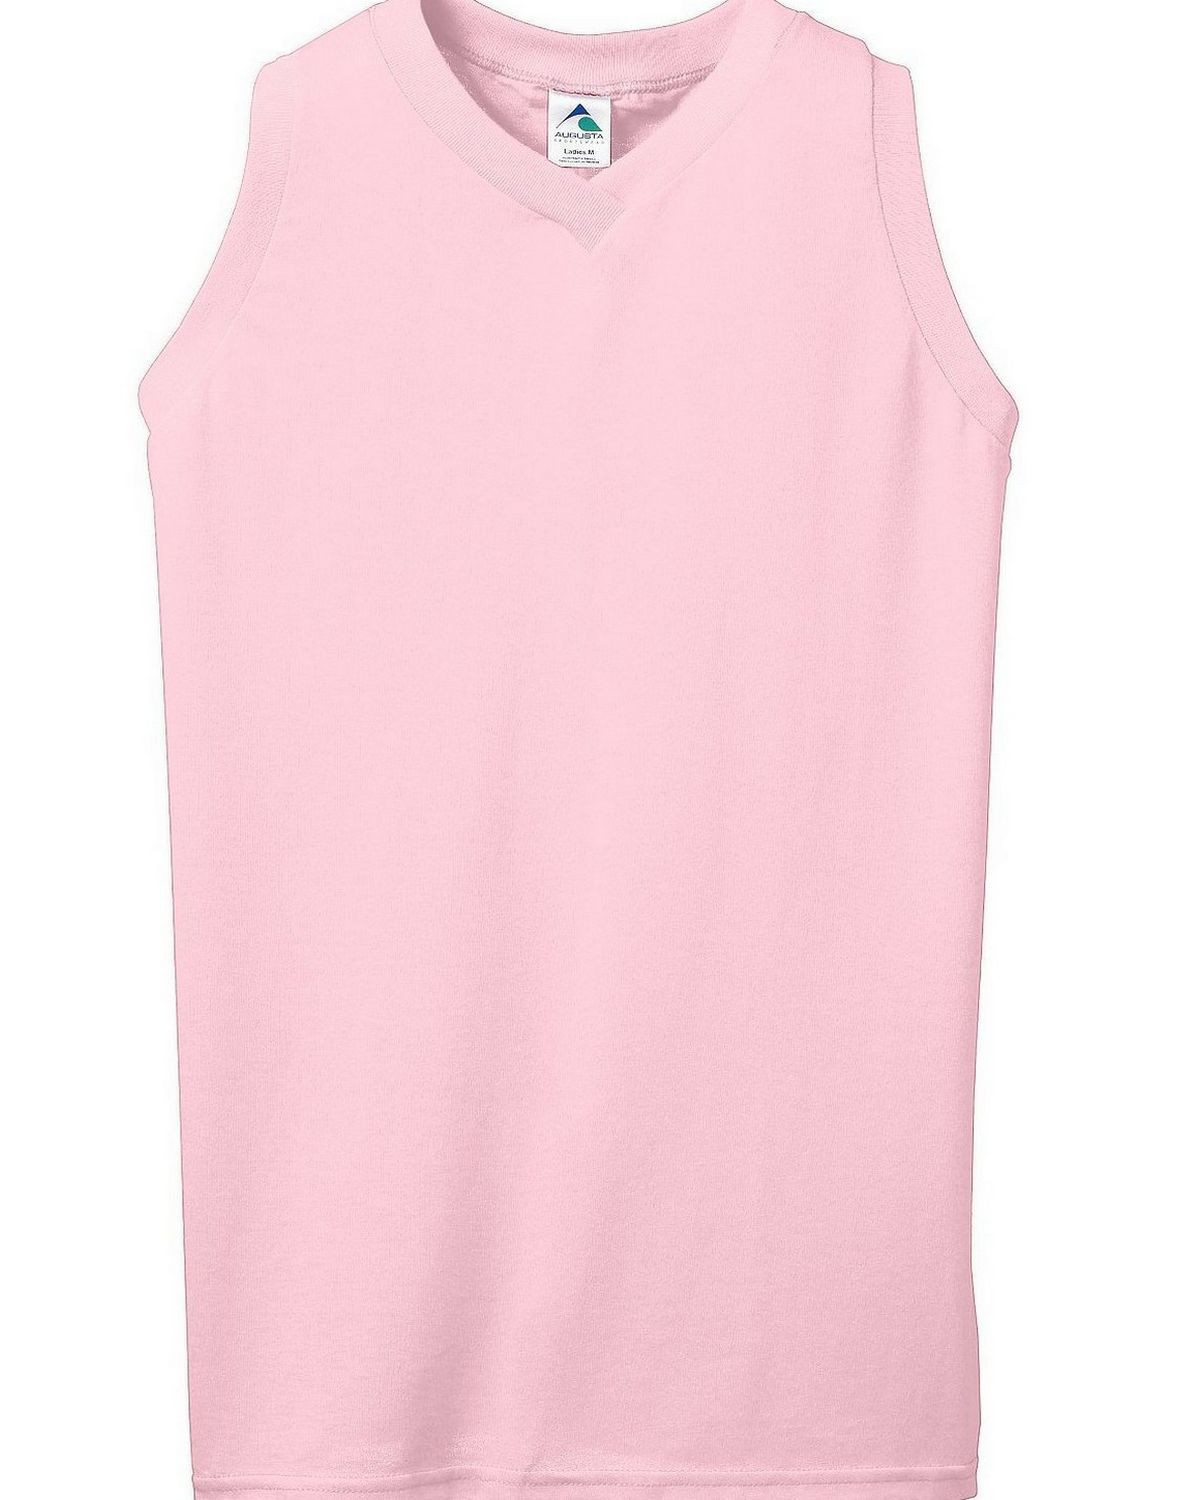 Augusta Sportswear 556 Women's Sleeveless V Neck Shirt - Light Pink - S #sleeveless